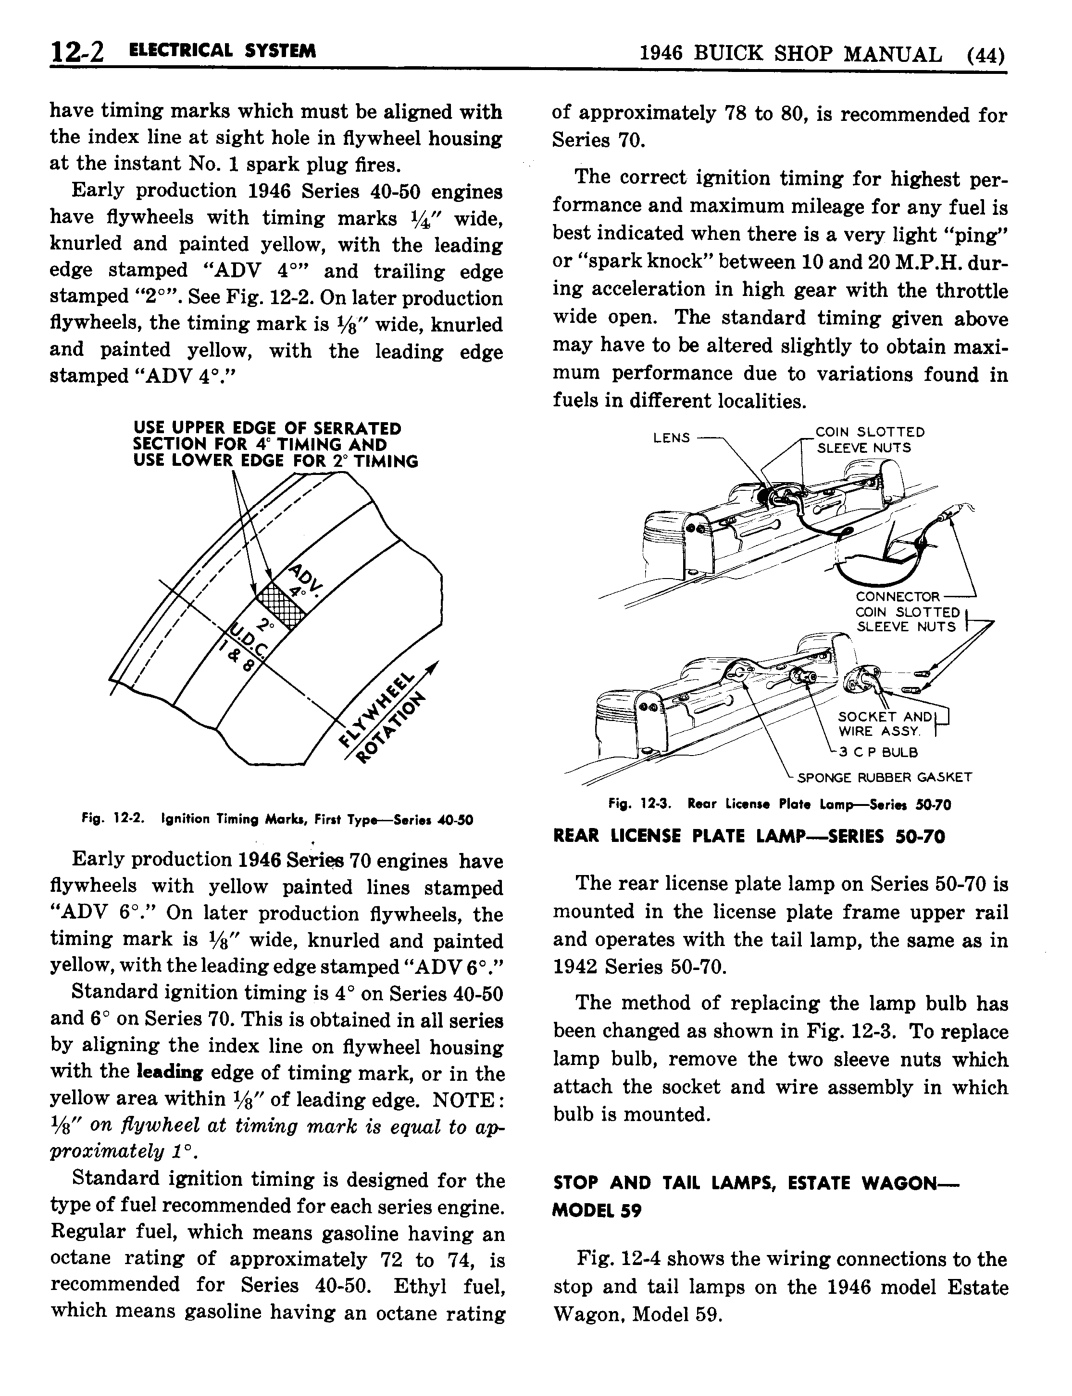 n_12 1946 Buick Shop Manual - Electrical System-002-002.jpg